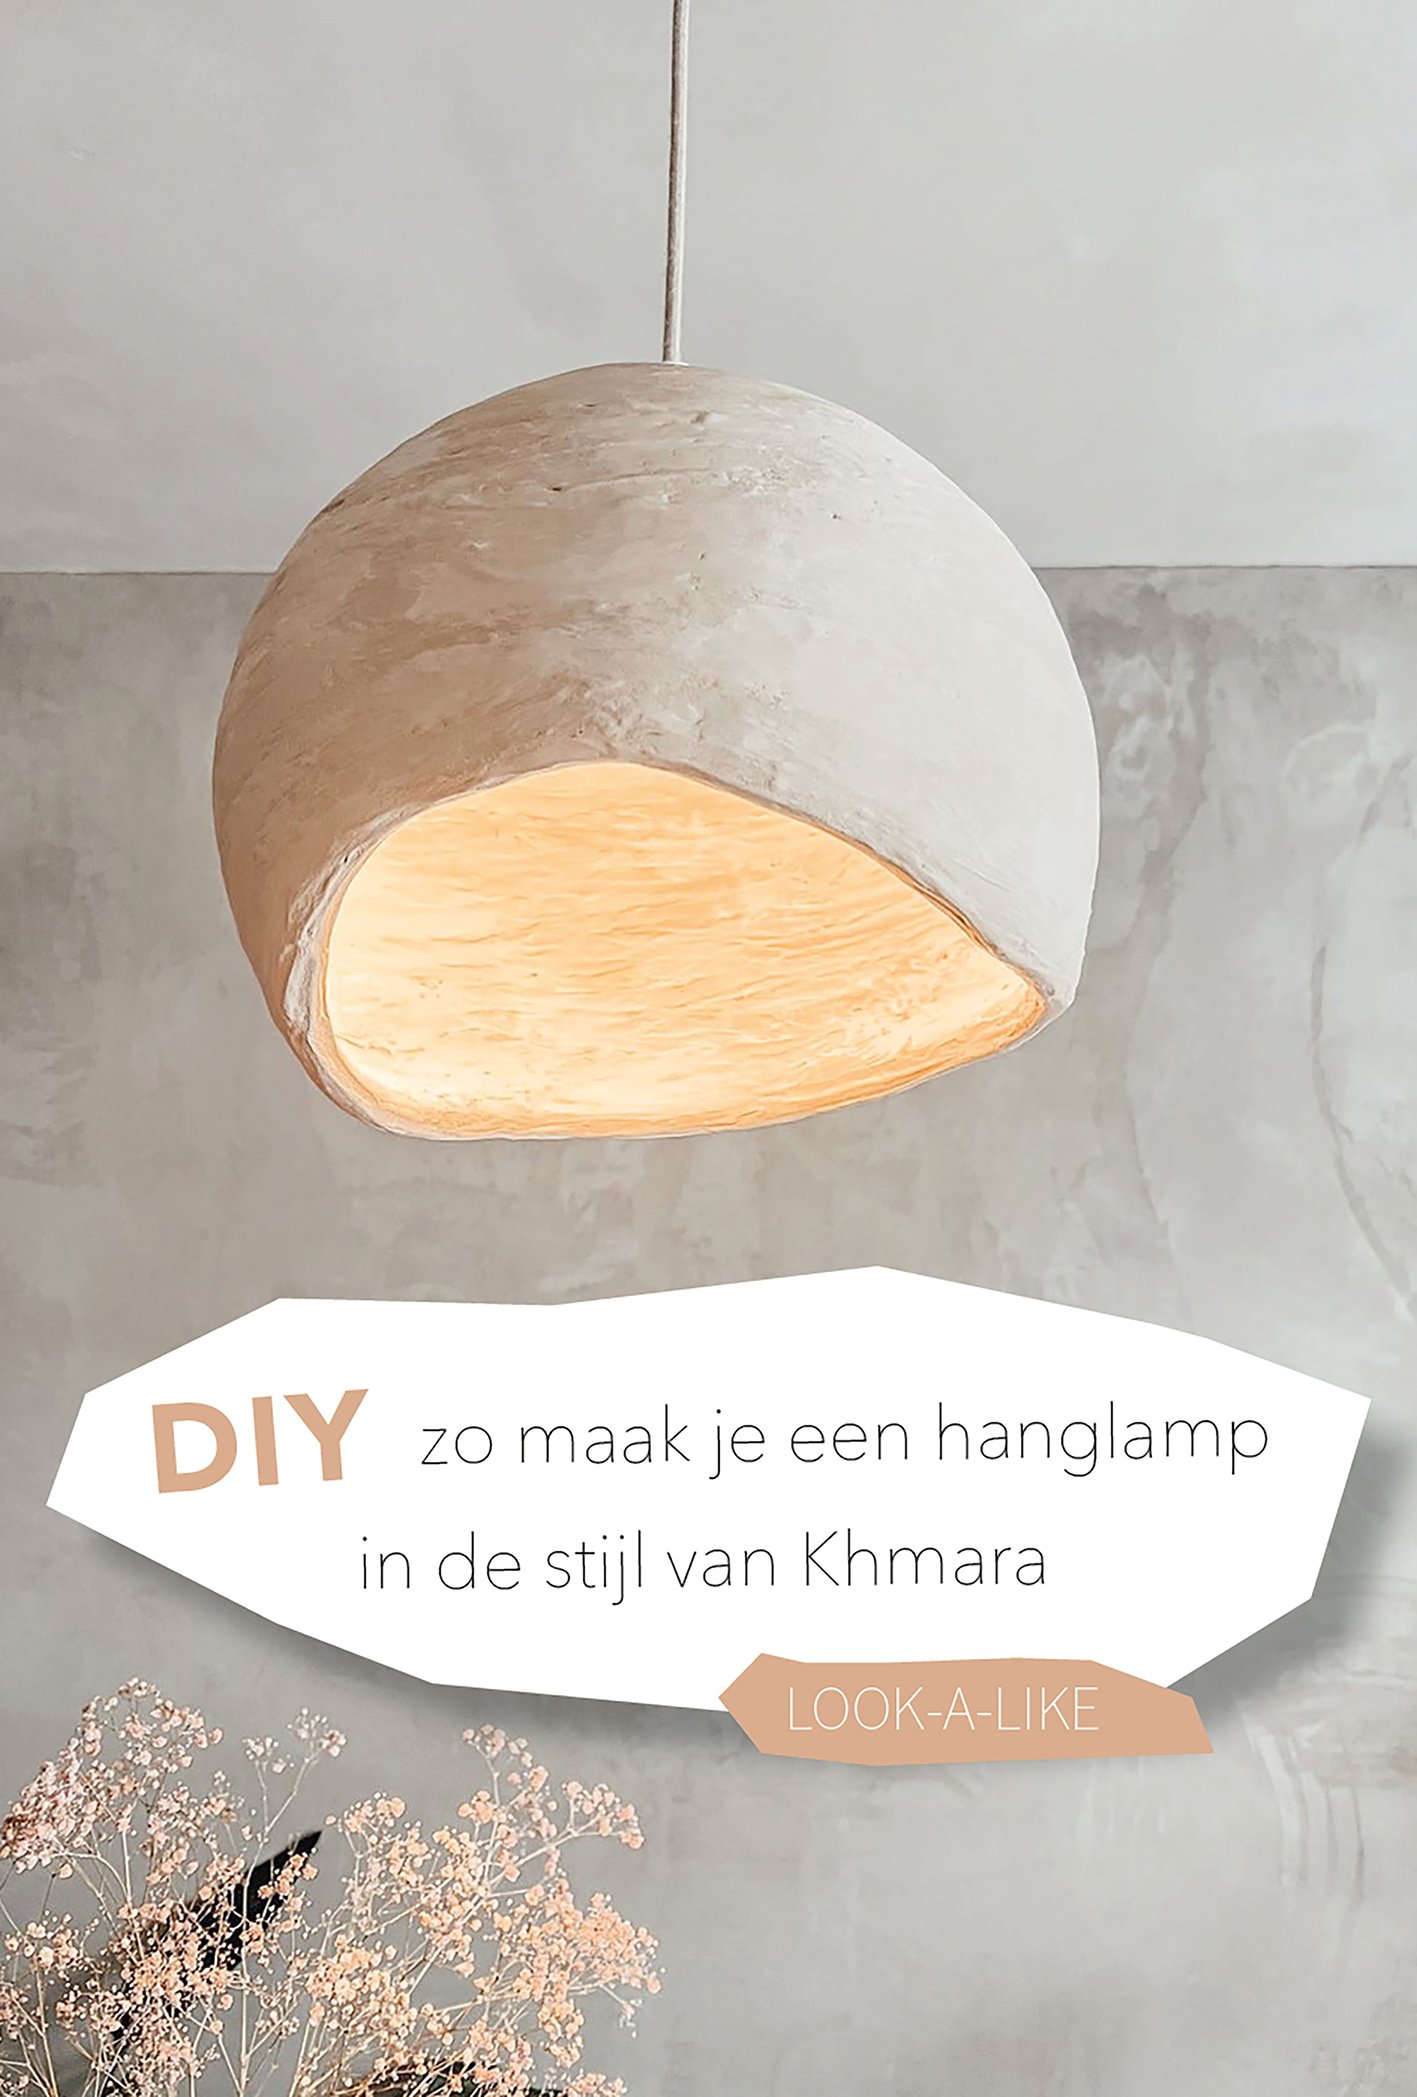 Pa machine stroomkring Khmara hanglamp DIY: zo maak je een budgetvriendelijk look-a-like —  sevencouches